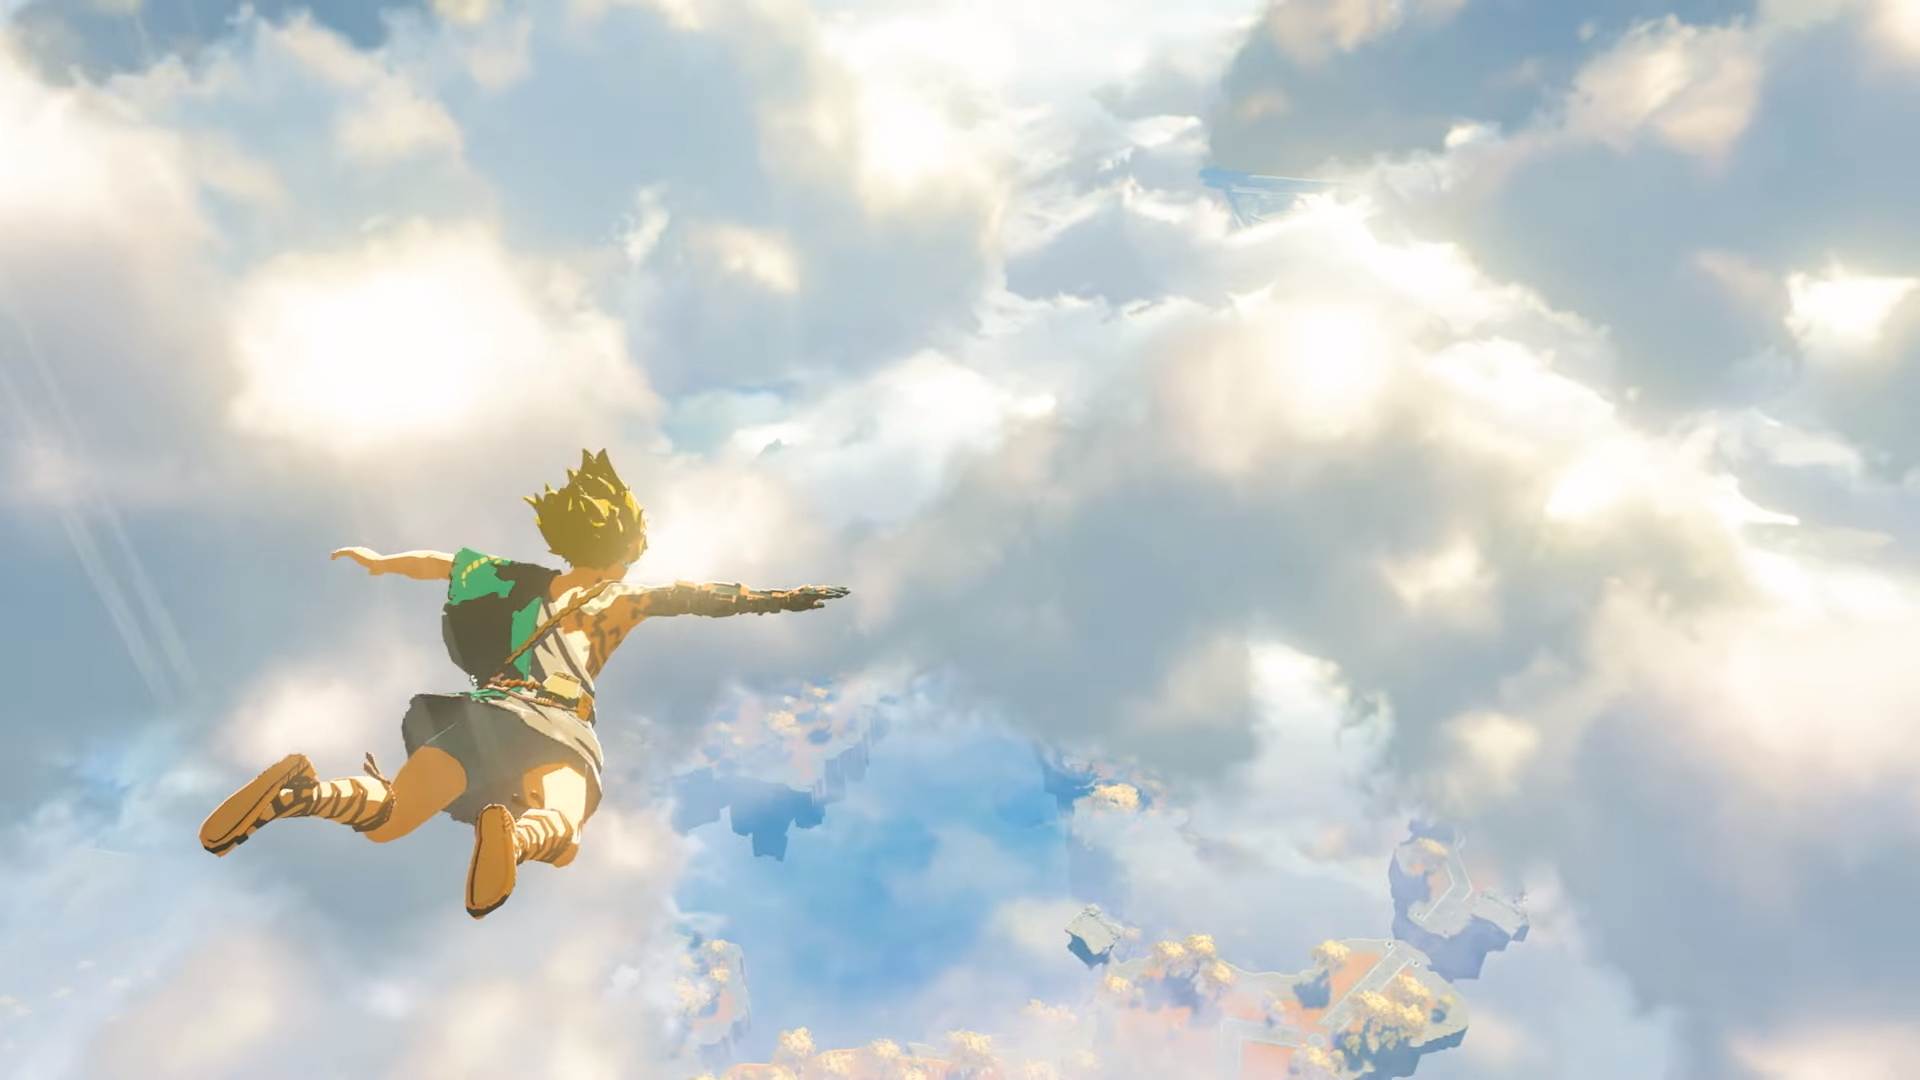 New Zelda game: Crazy theories of Breath of the Wild